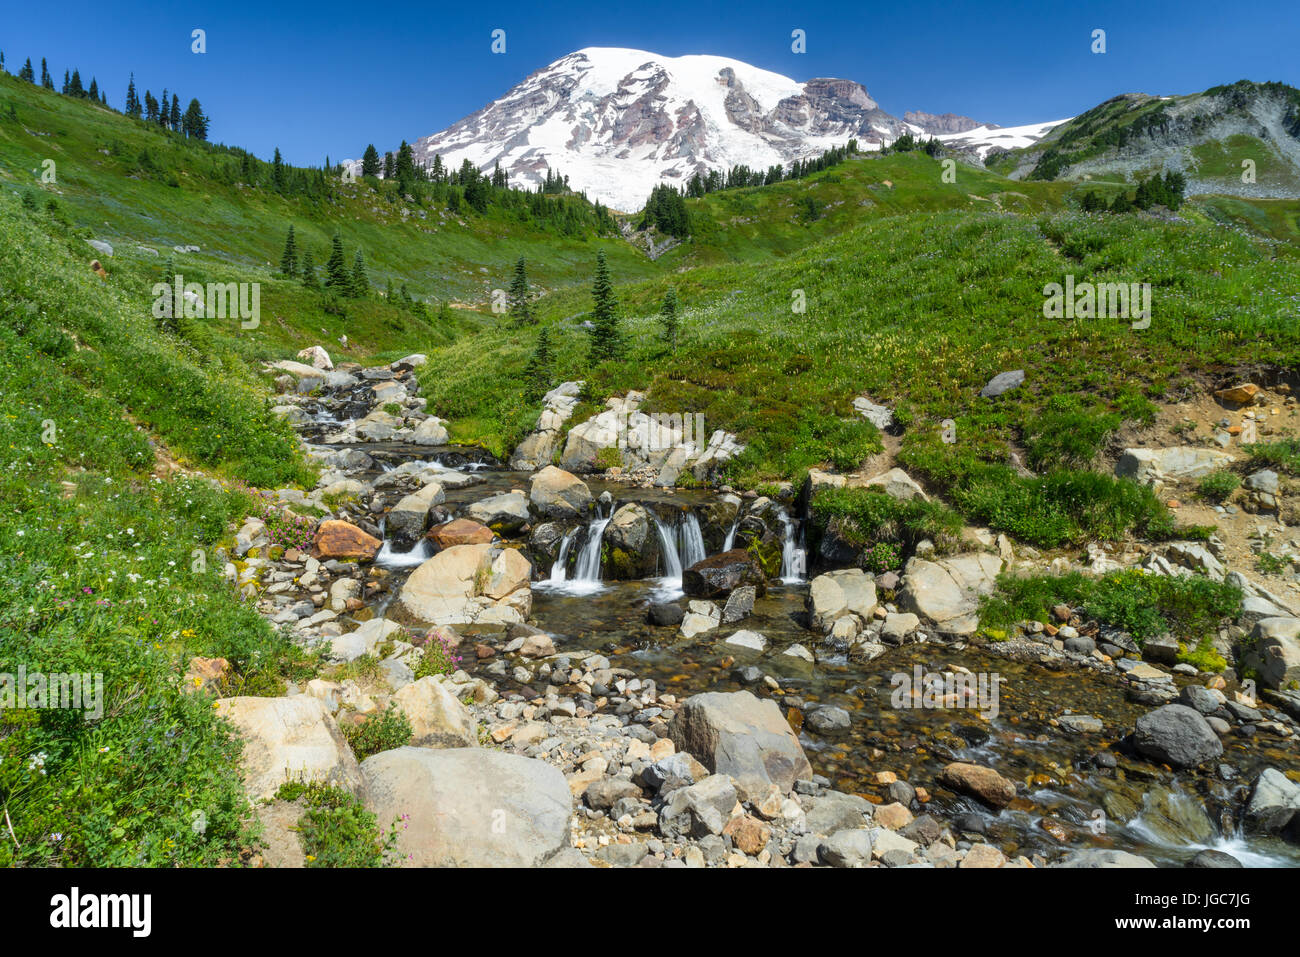 Mount Rainier with a glacier stream and wildflowers Stock Photo